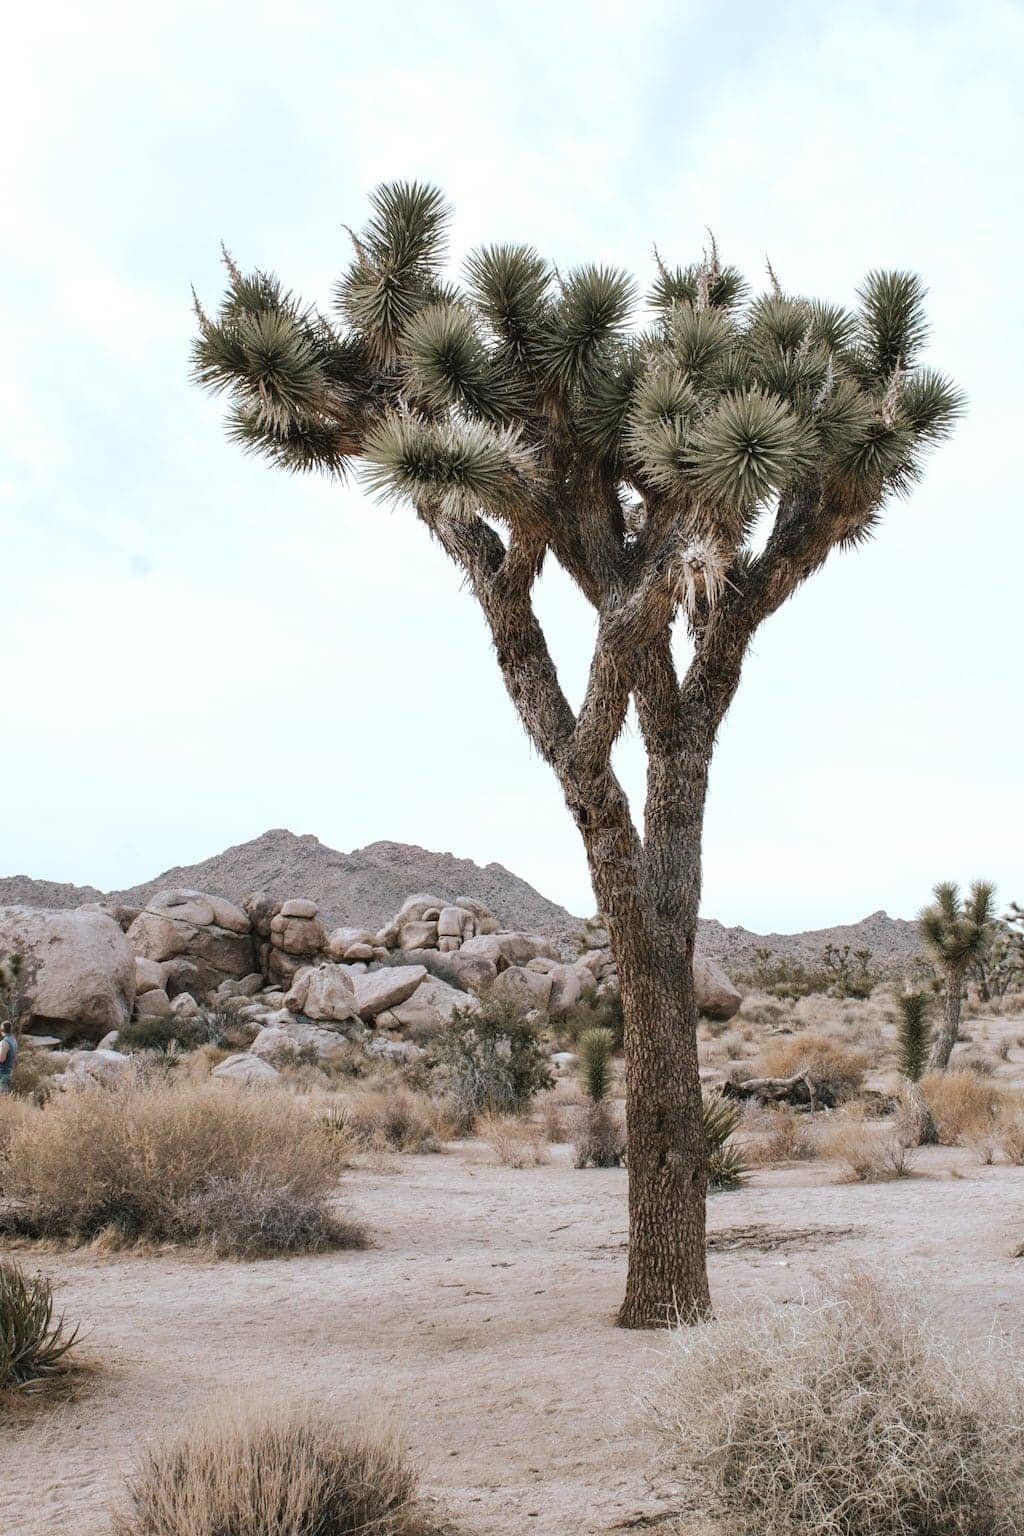 Weekend Guide to Joshua Tree: Joshua Tree in the Mojave desert